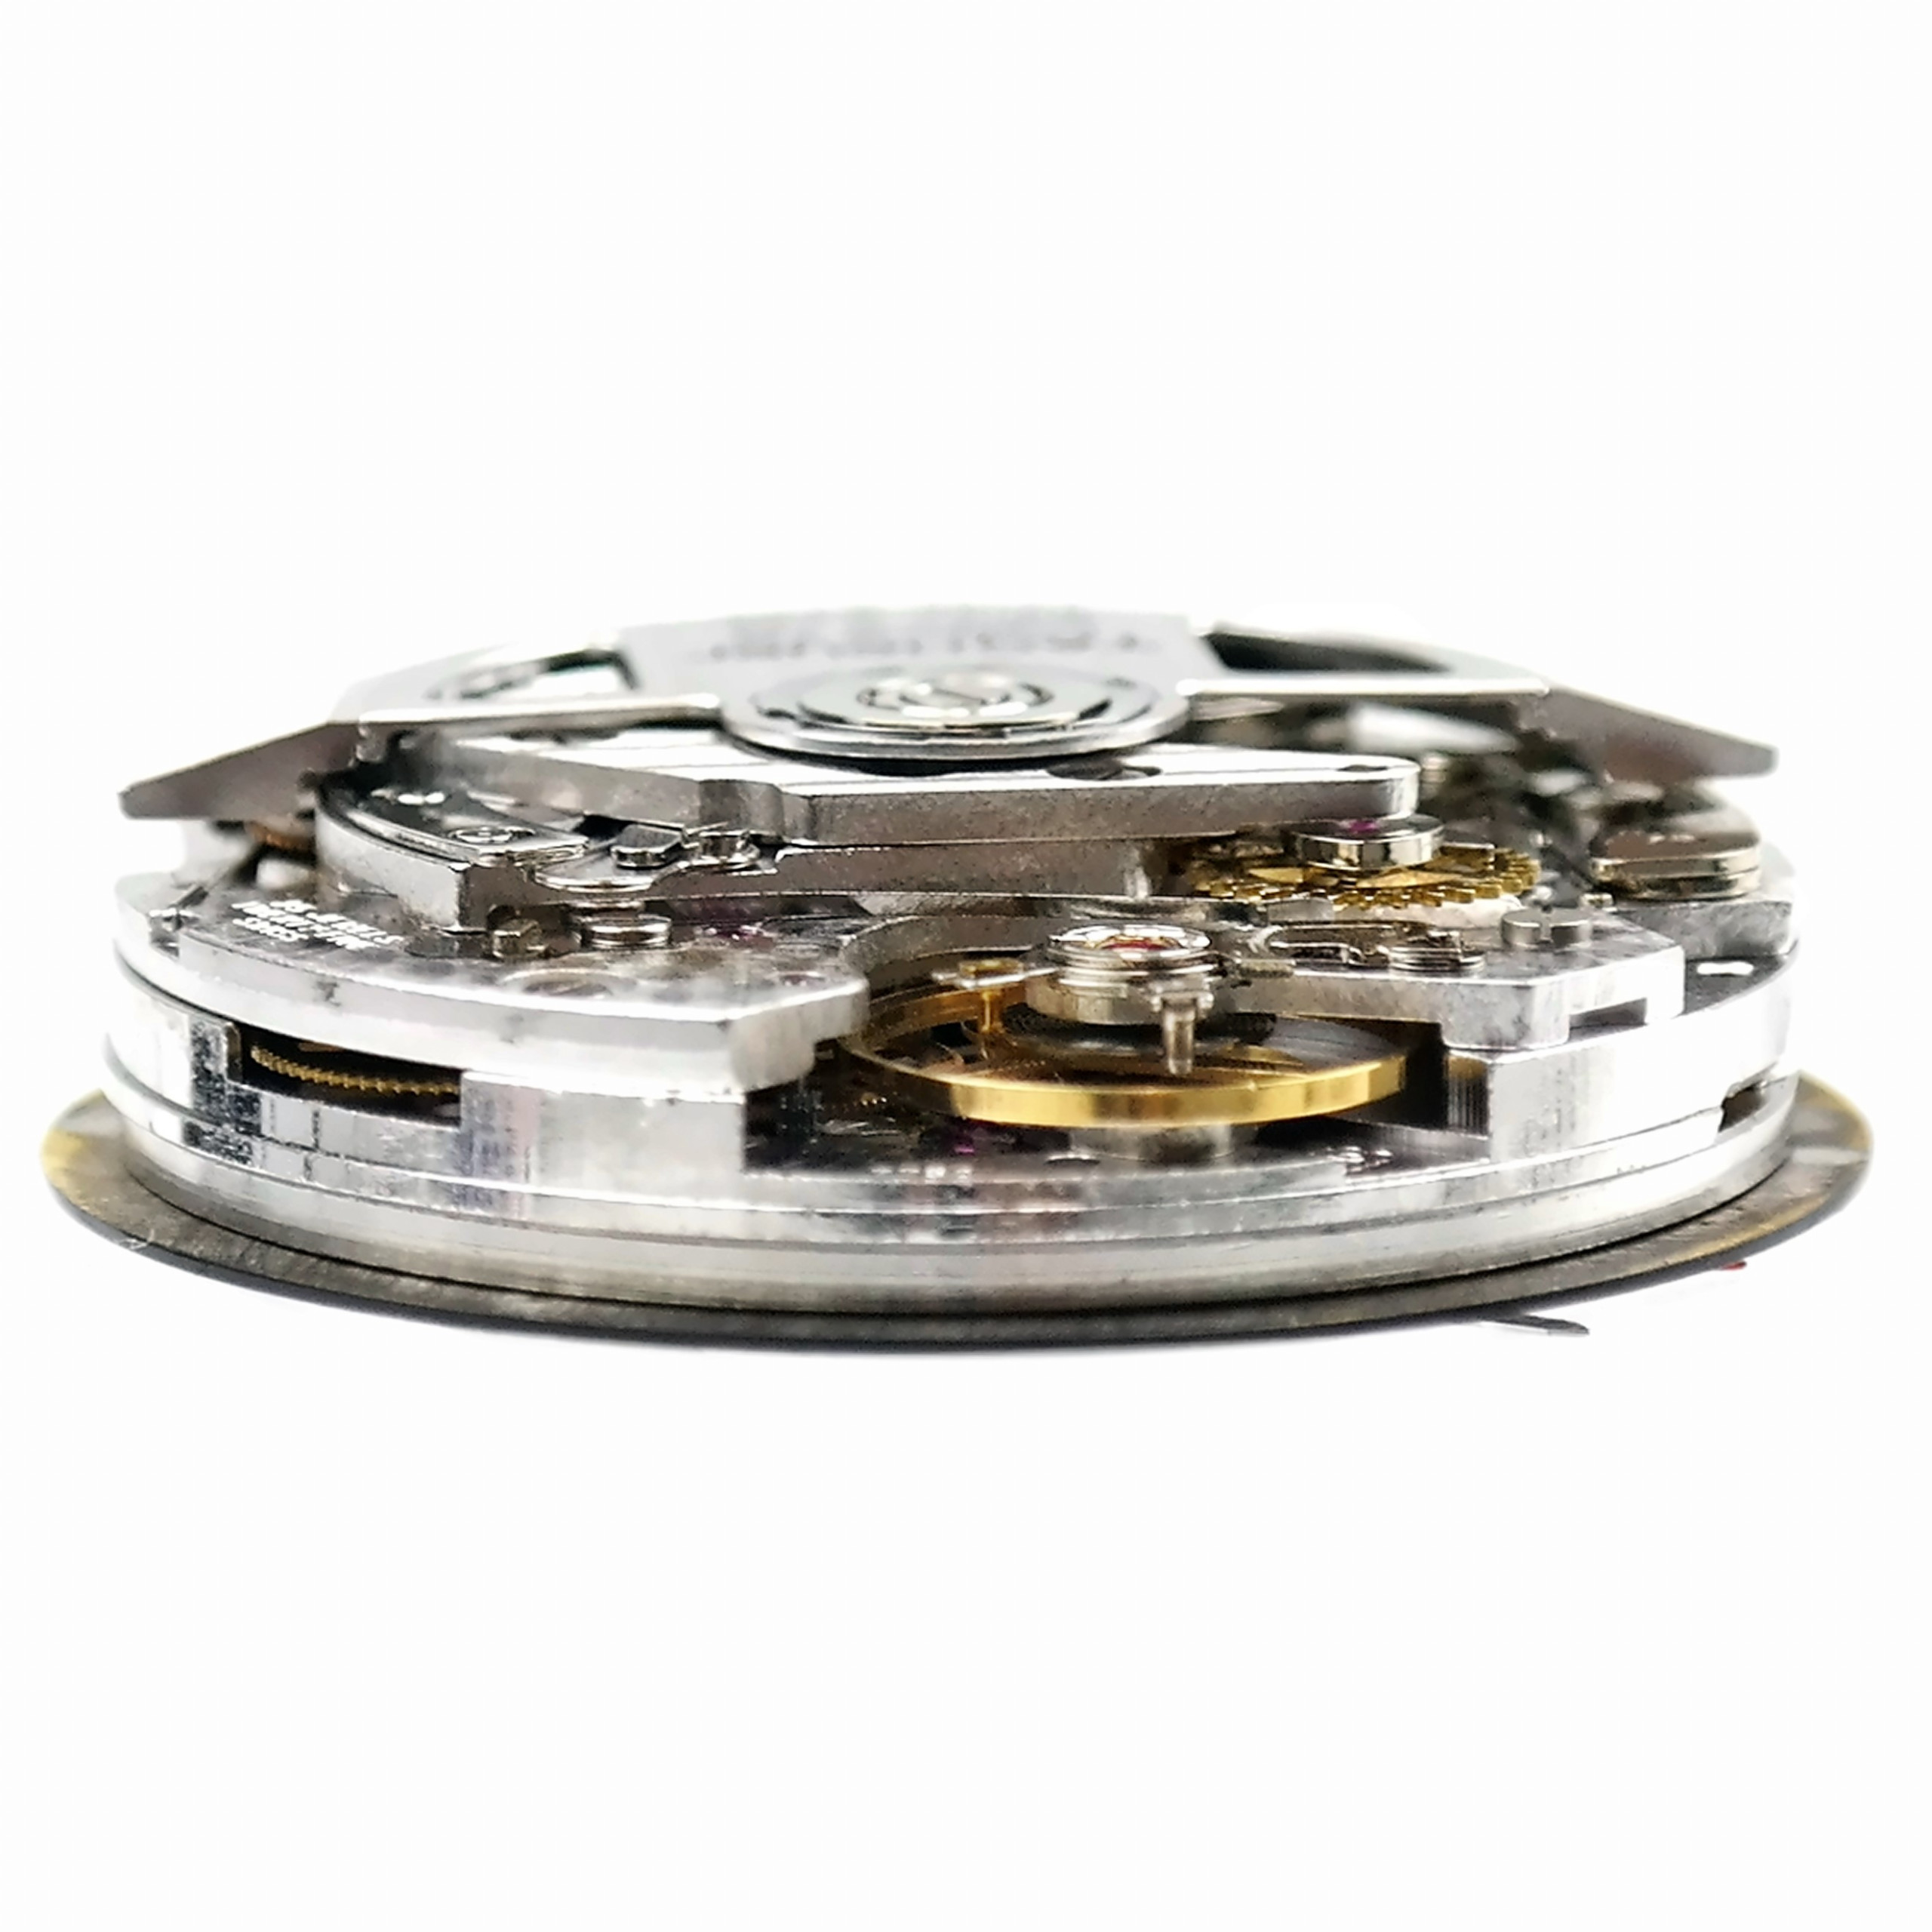 TAG Heuer Carrera CV2014 Calibre 16 Automatic Chronograph Watch Kit